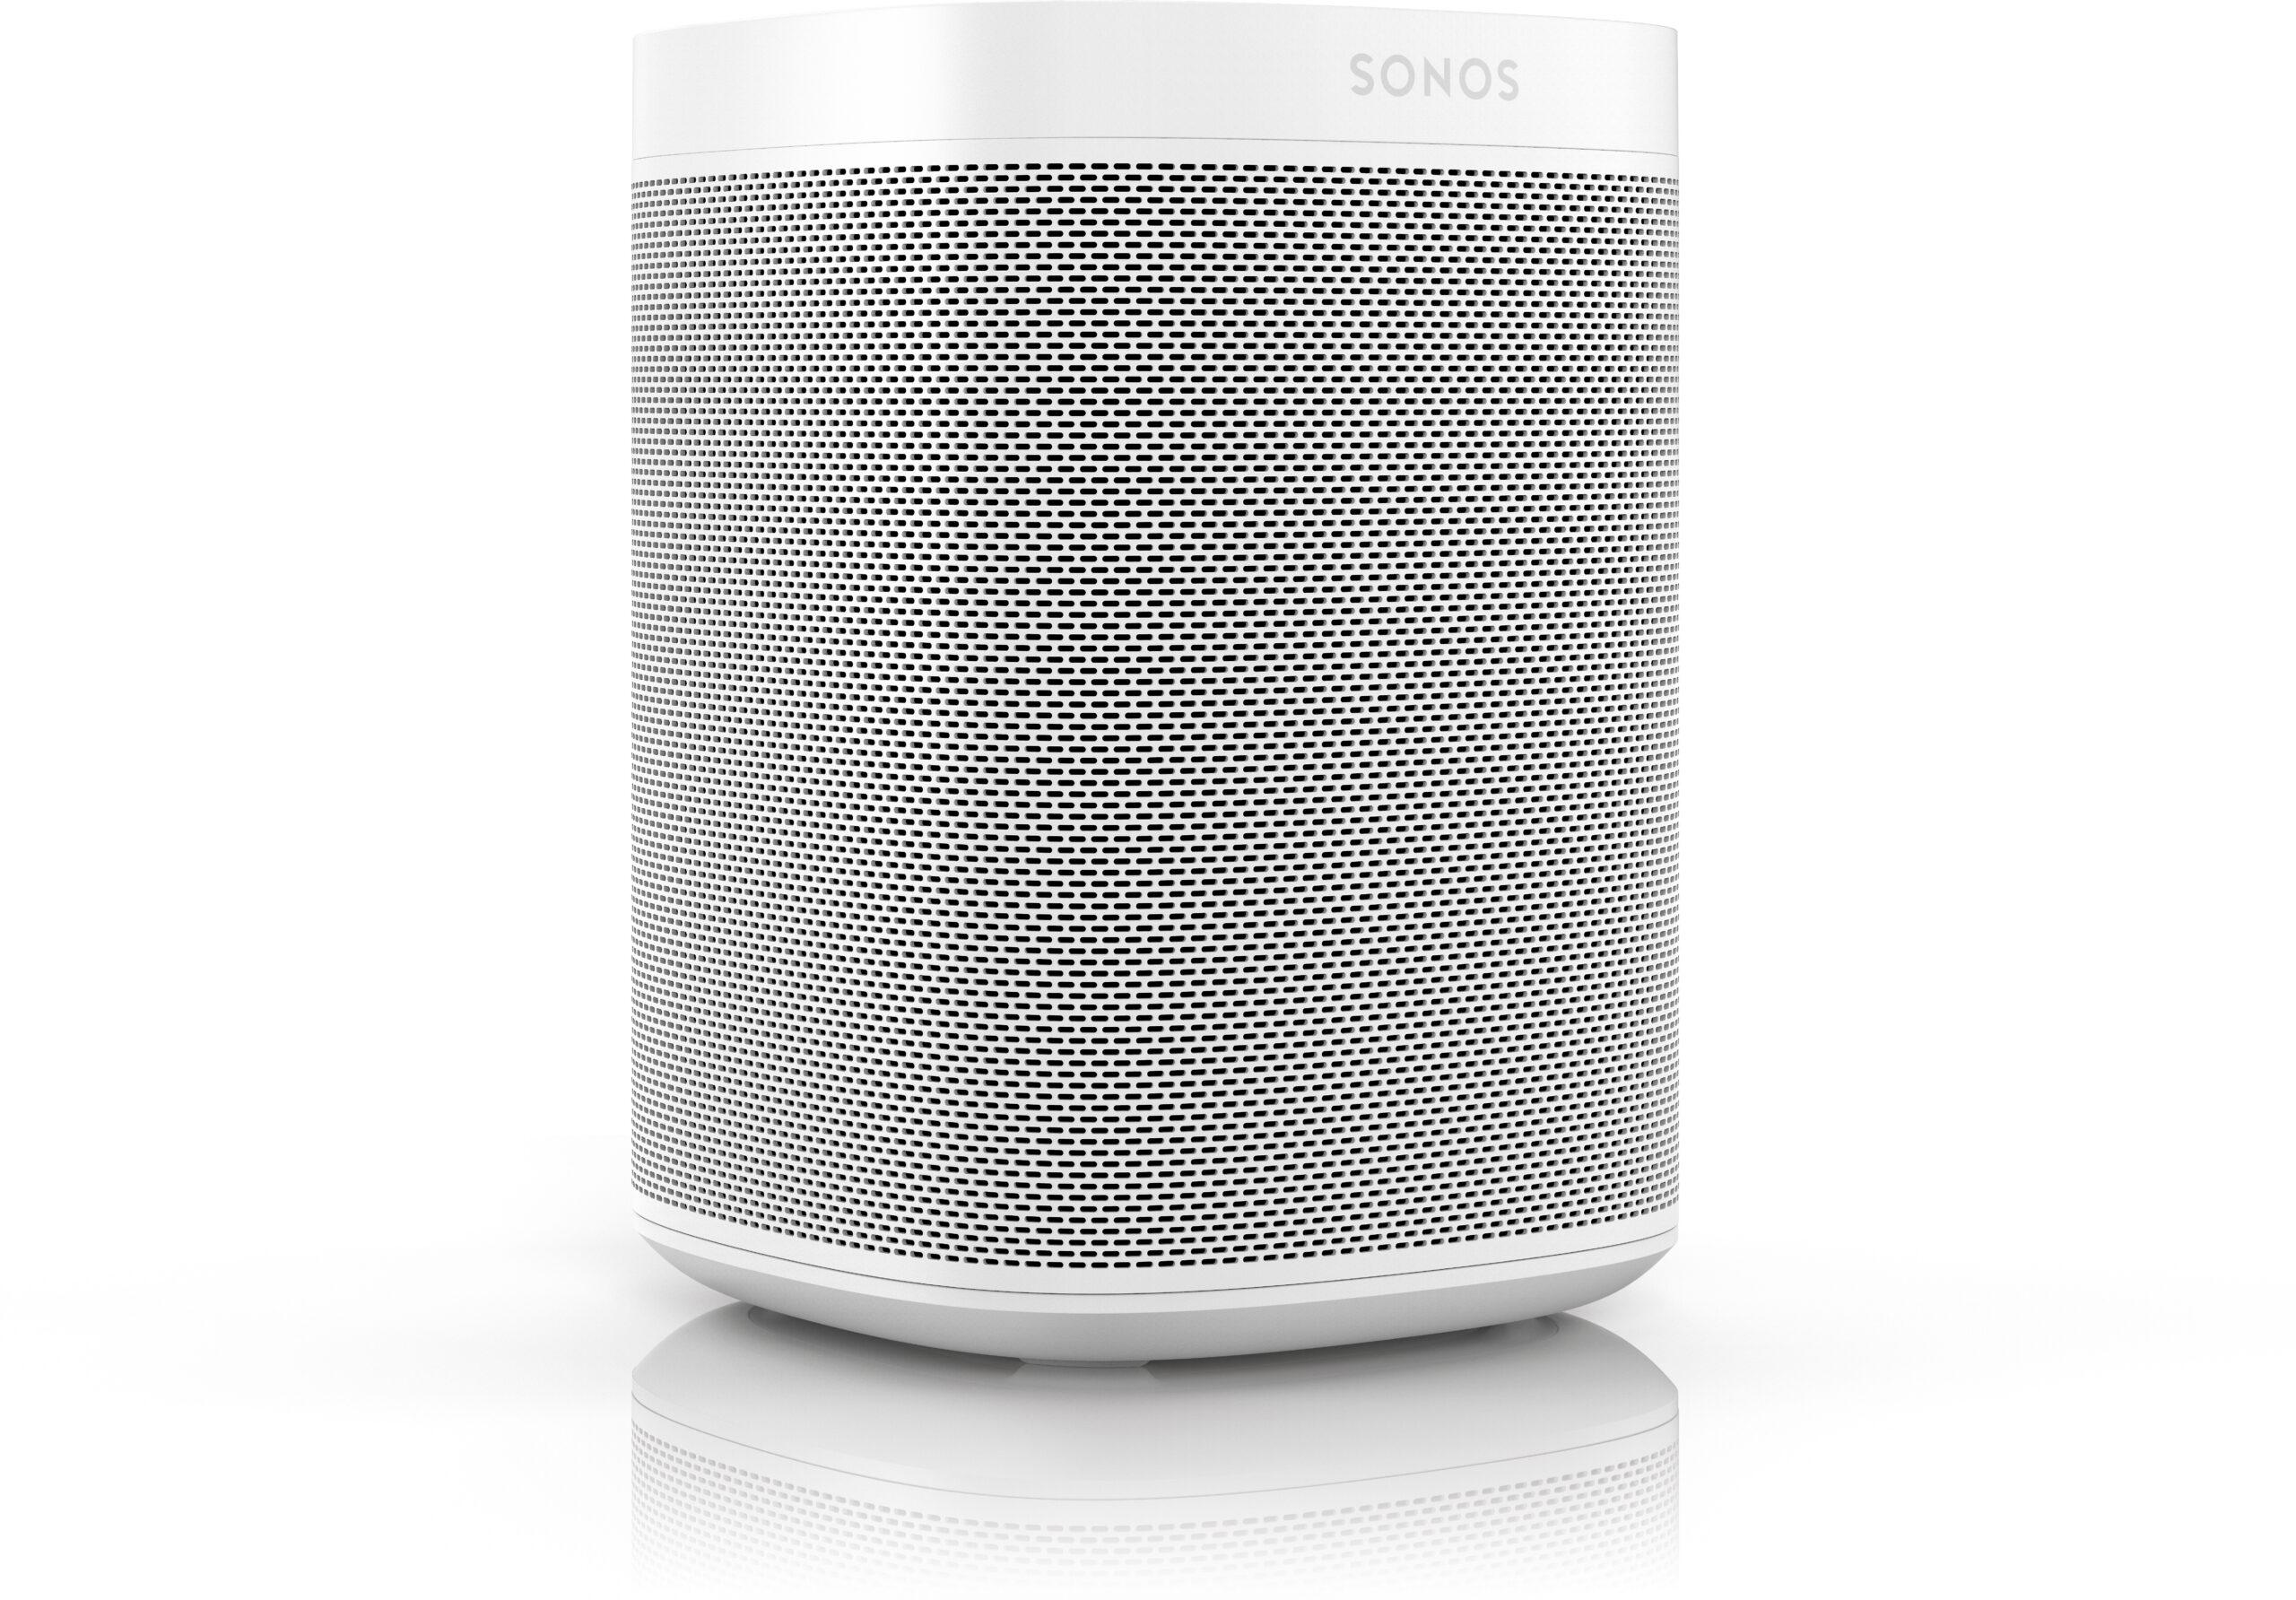 Sonos One SL amplified wireless music player (white)